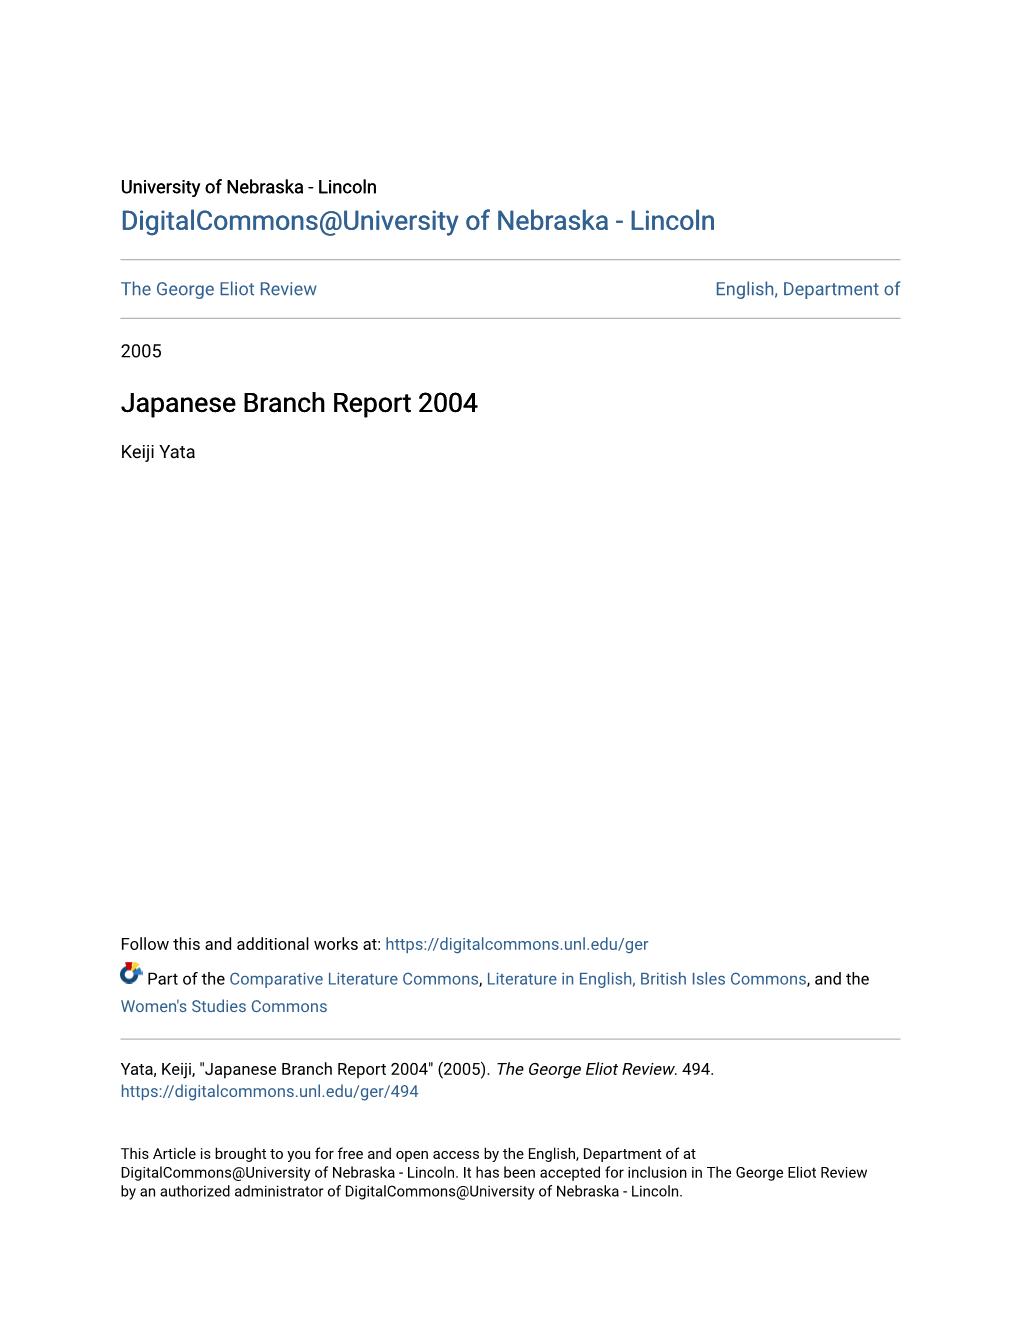 Japanese Branch Report 2004